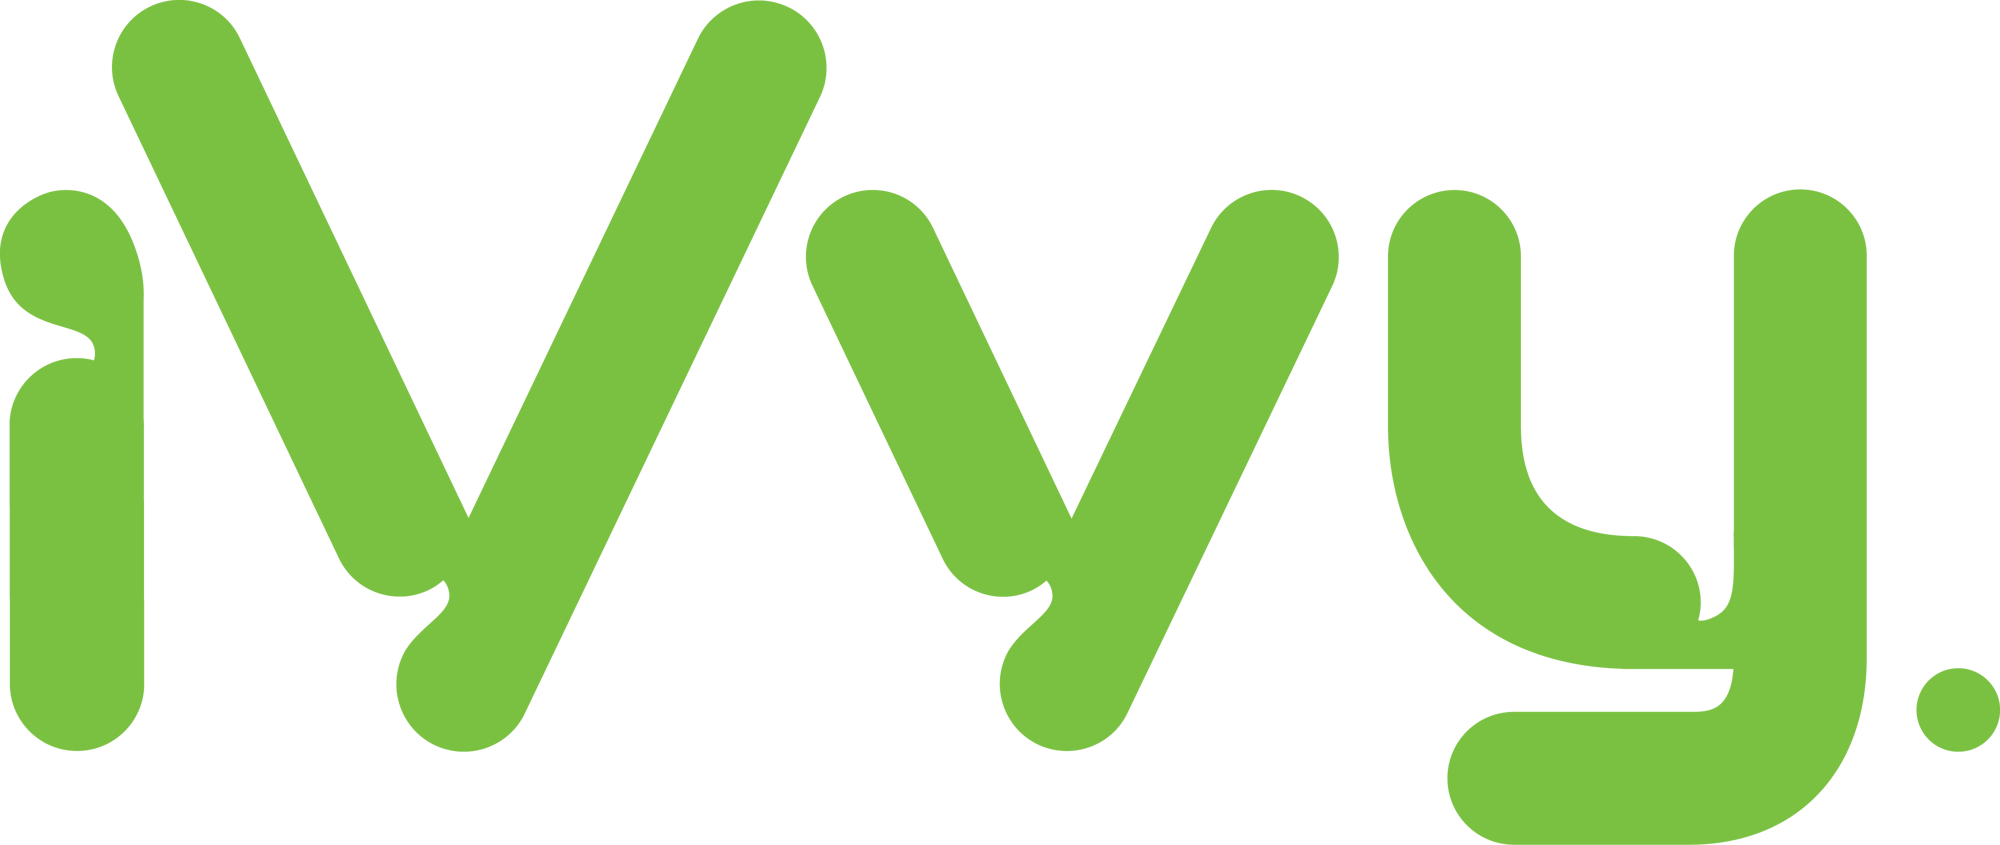 iVvy-2021-logo-Green